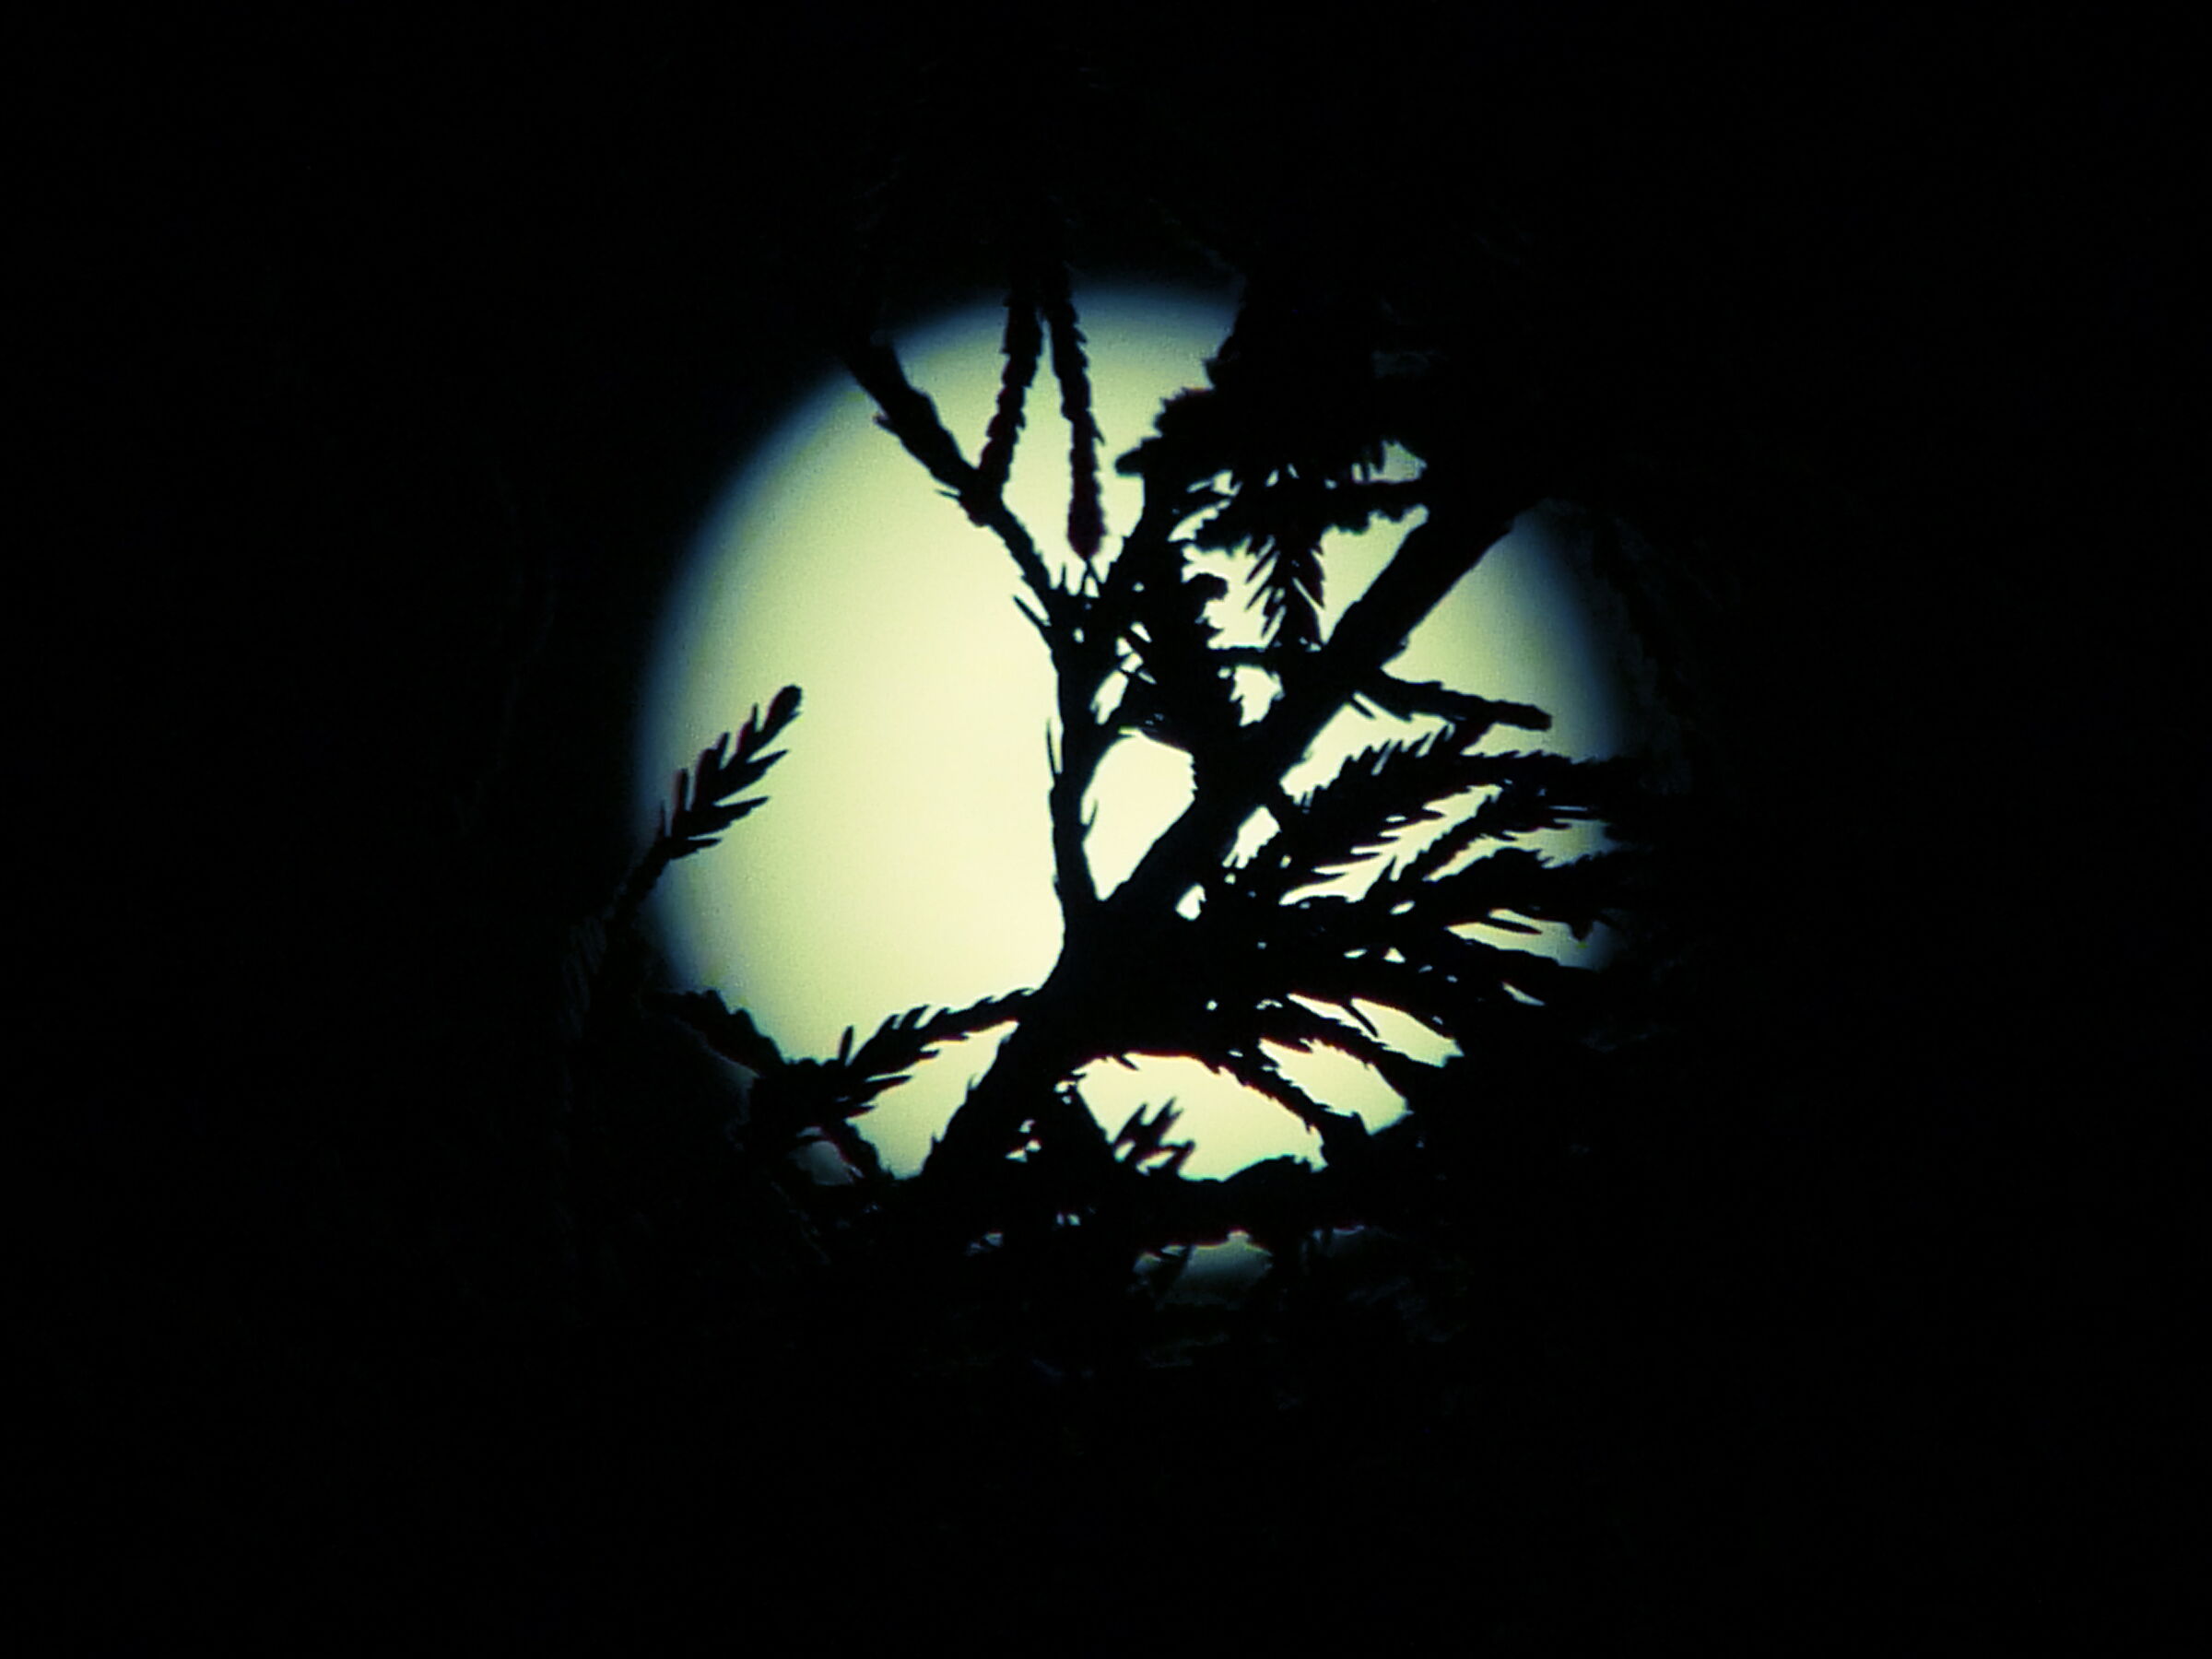 Moon between branches 03/09/2020 n 2...